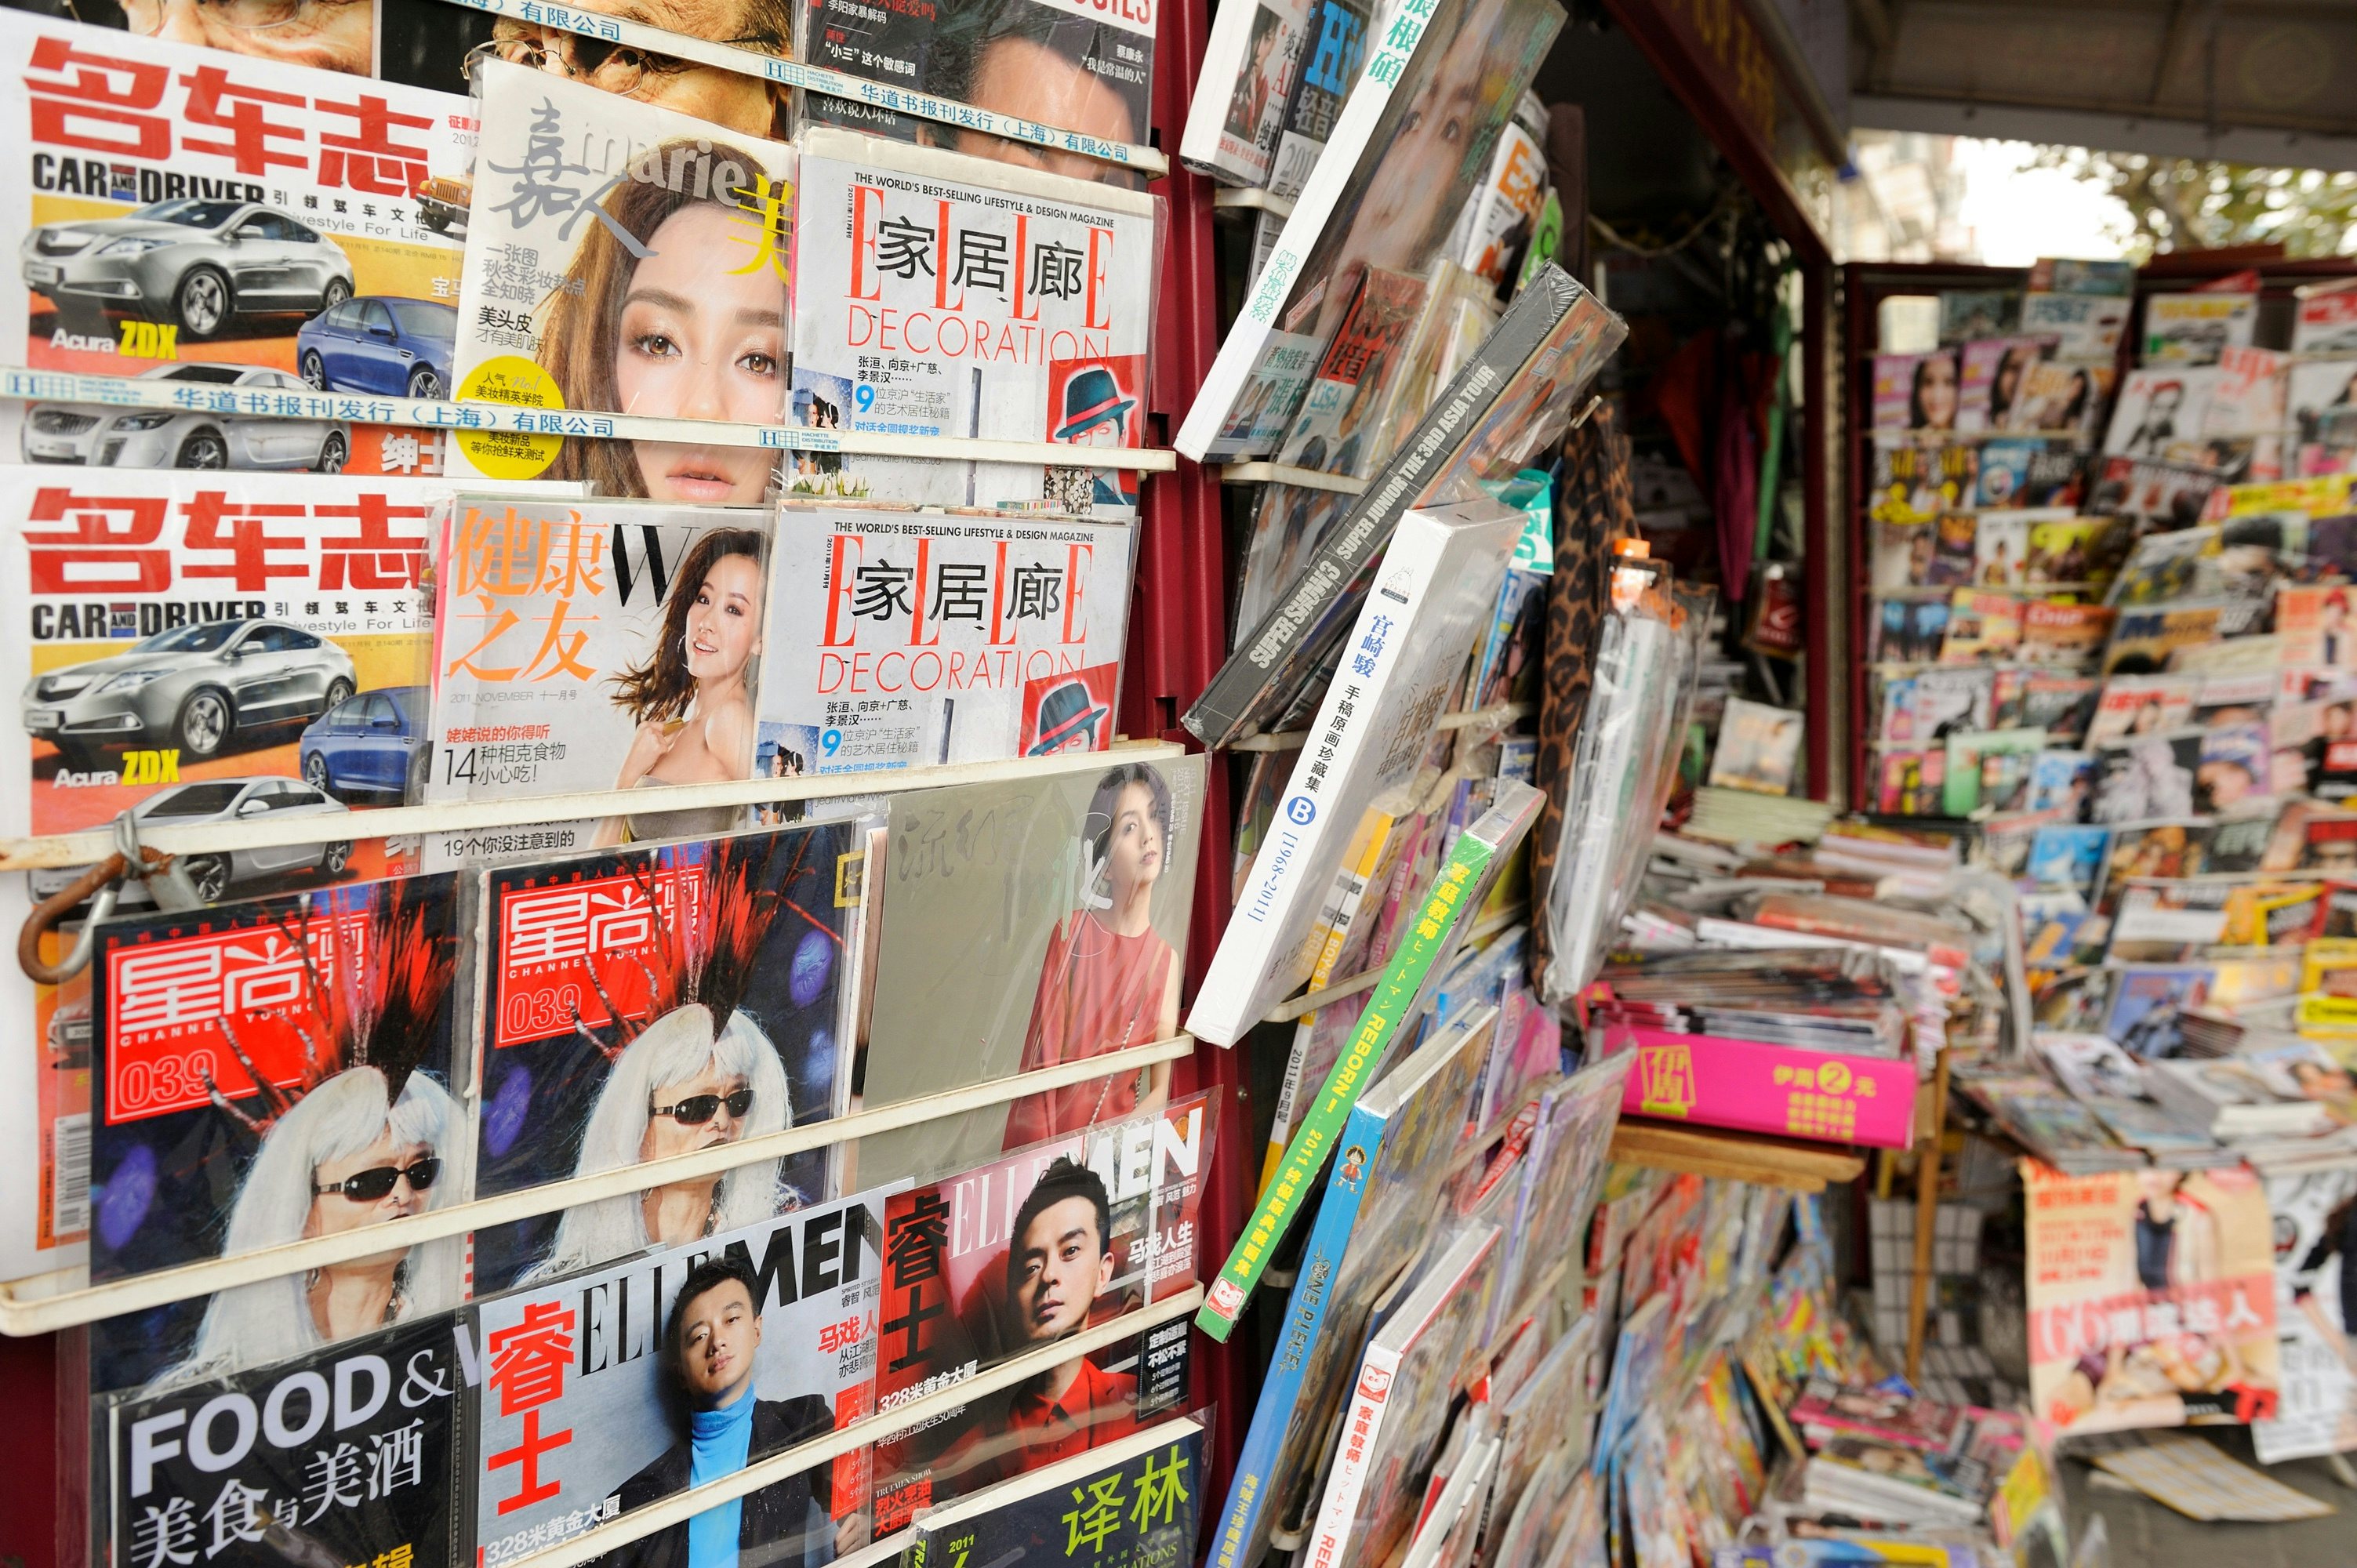 A magazine rack in Shanghai. (Shutterstock)